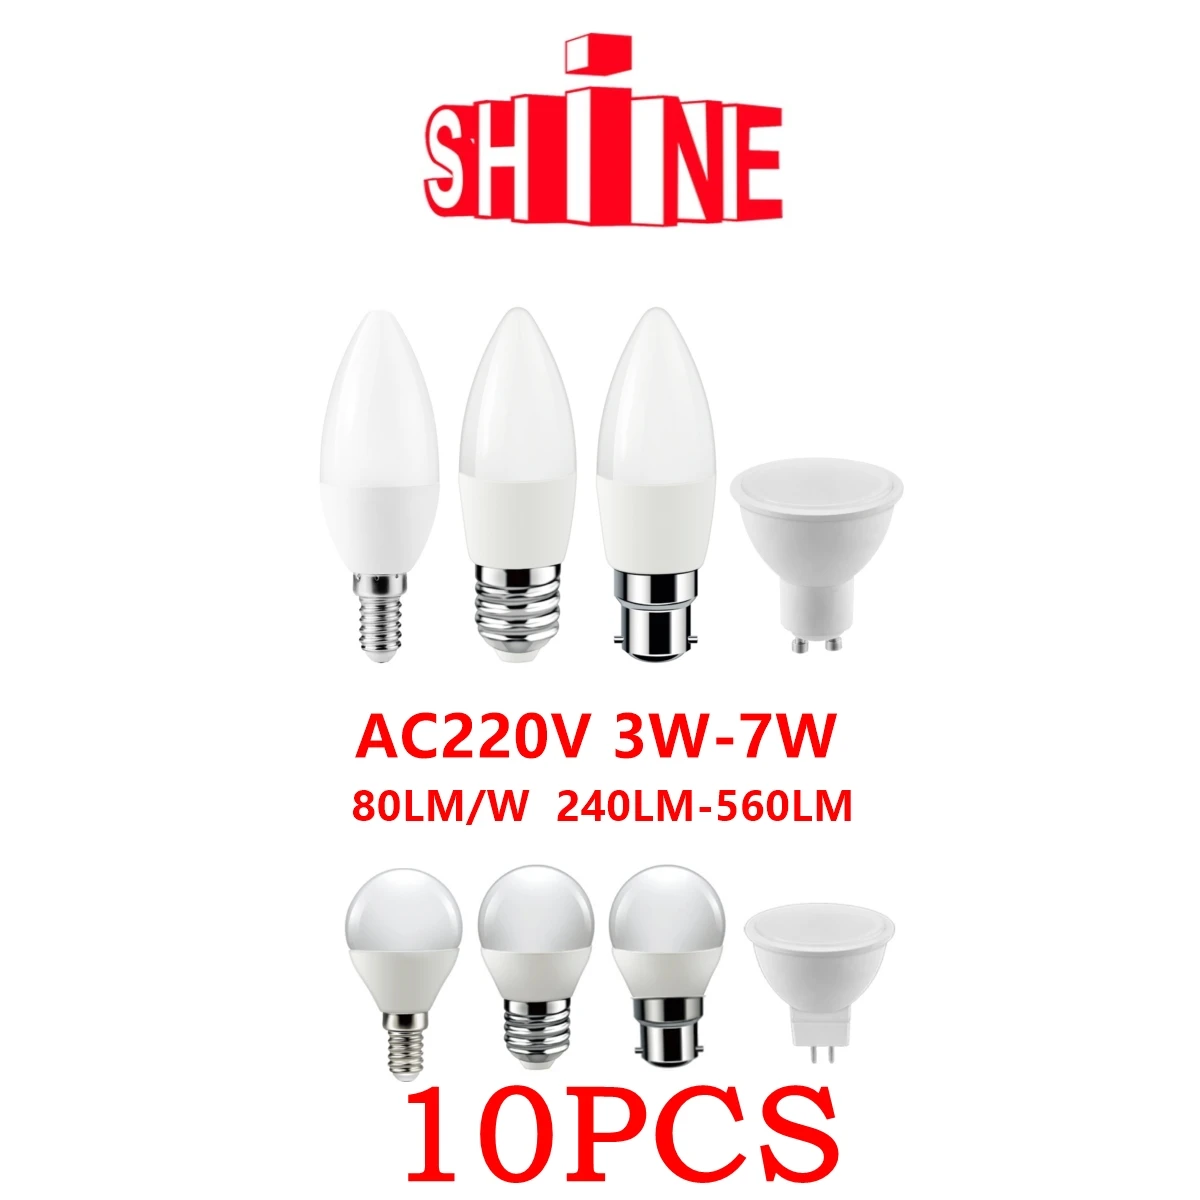 

10PCS Factory direct LED light bulb candle lamp G45 GU10 MR16 220V low power 3W-7W high lumen no strobe Apply to study kitchen